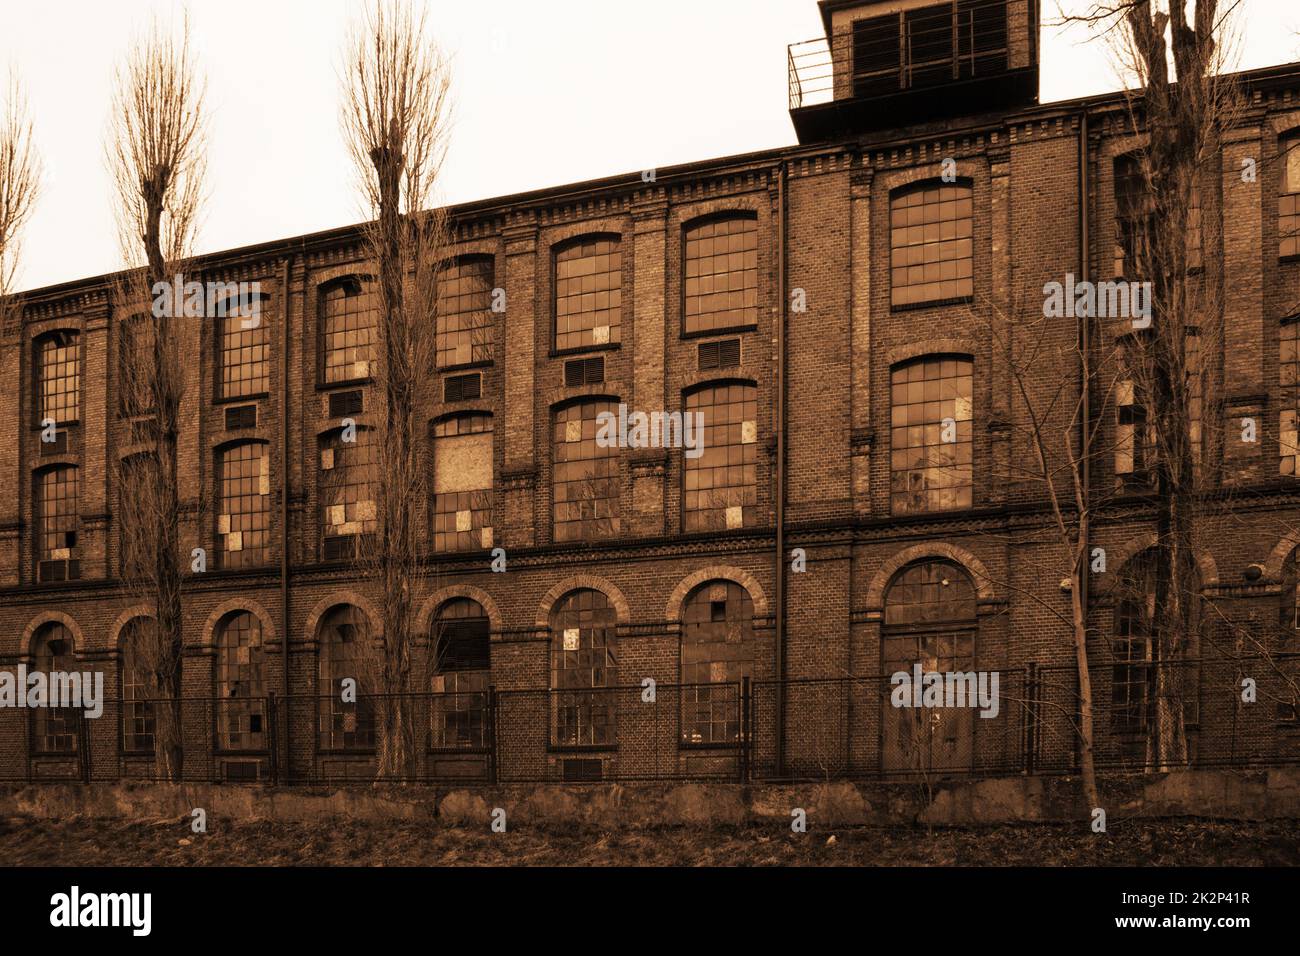 Alte industrielle verfallenes Gebäude in Sepia Farbe Stockfoto